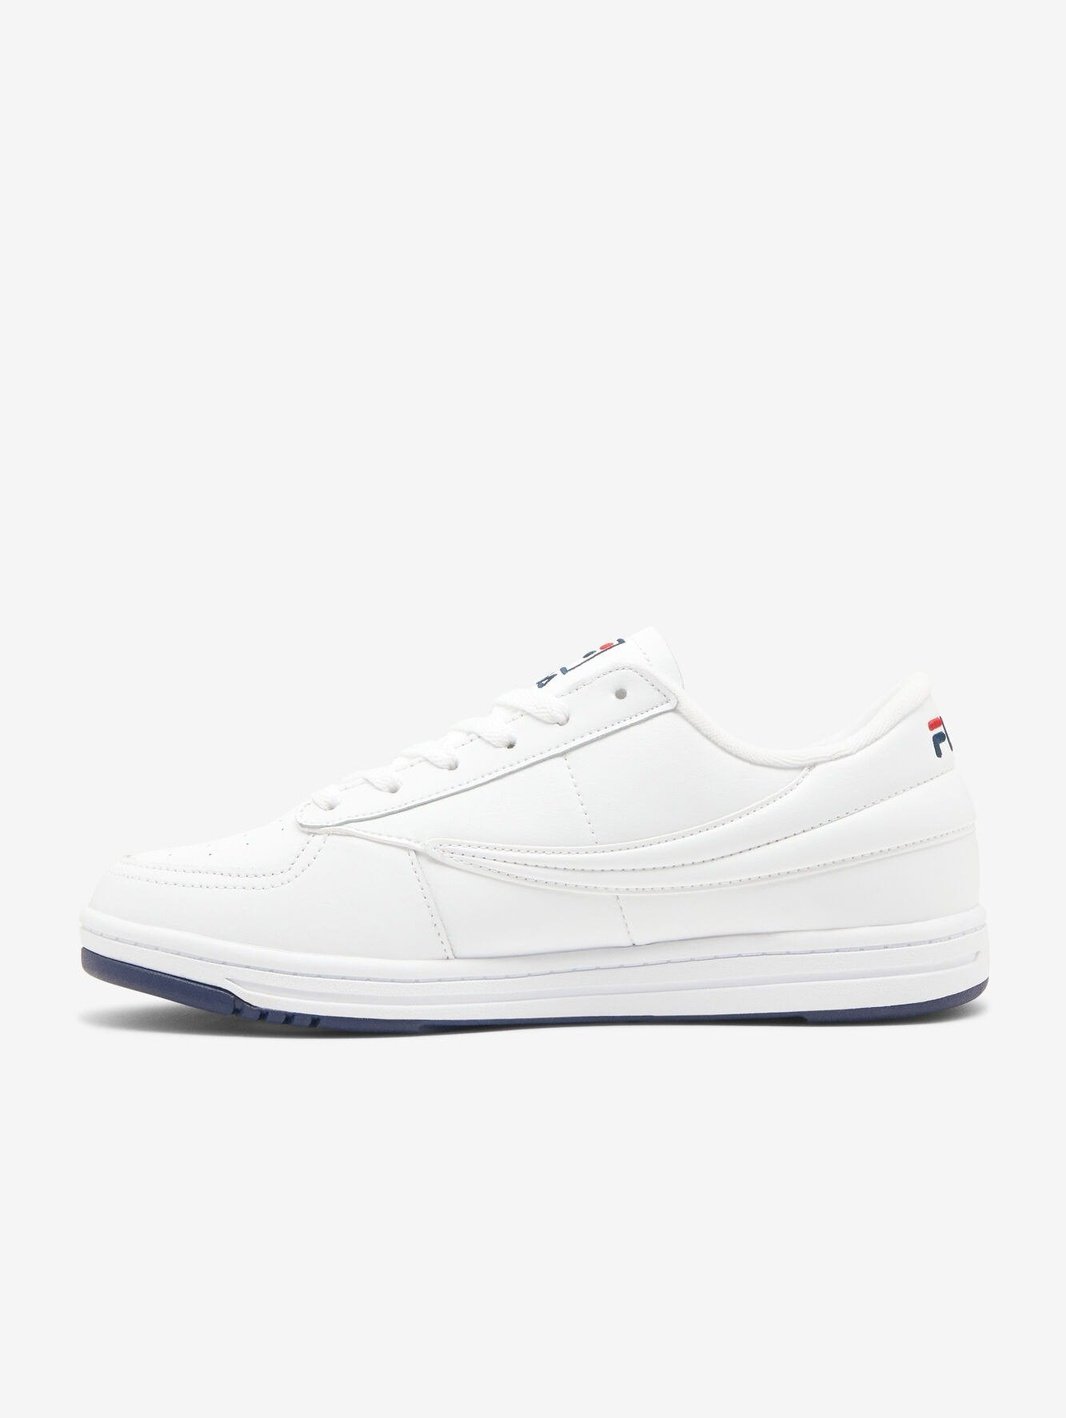 Fila Men's Tennis 88 Sneakers White/Navy/Red 1TM00592-125.